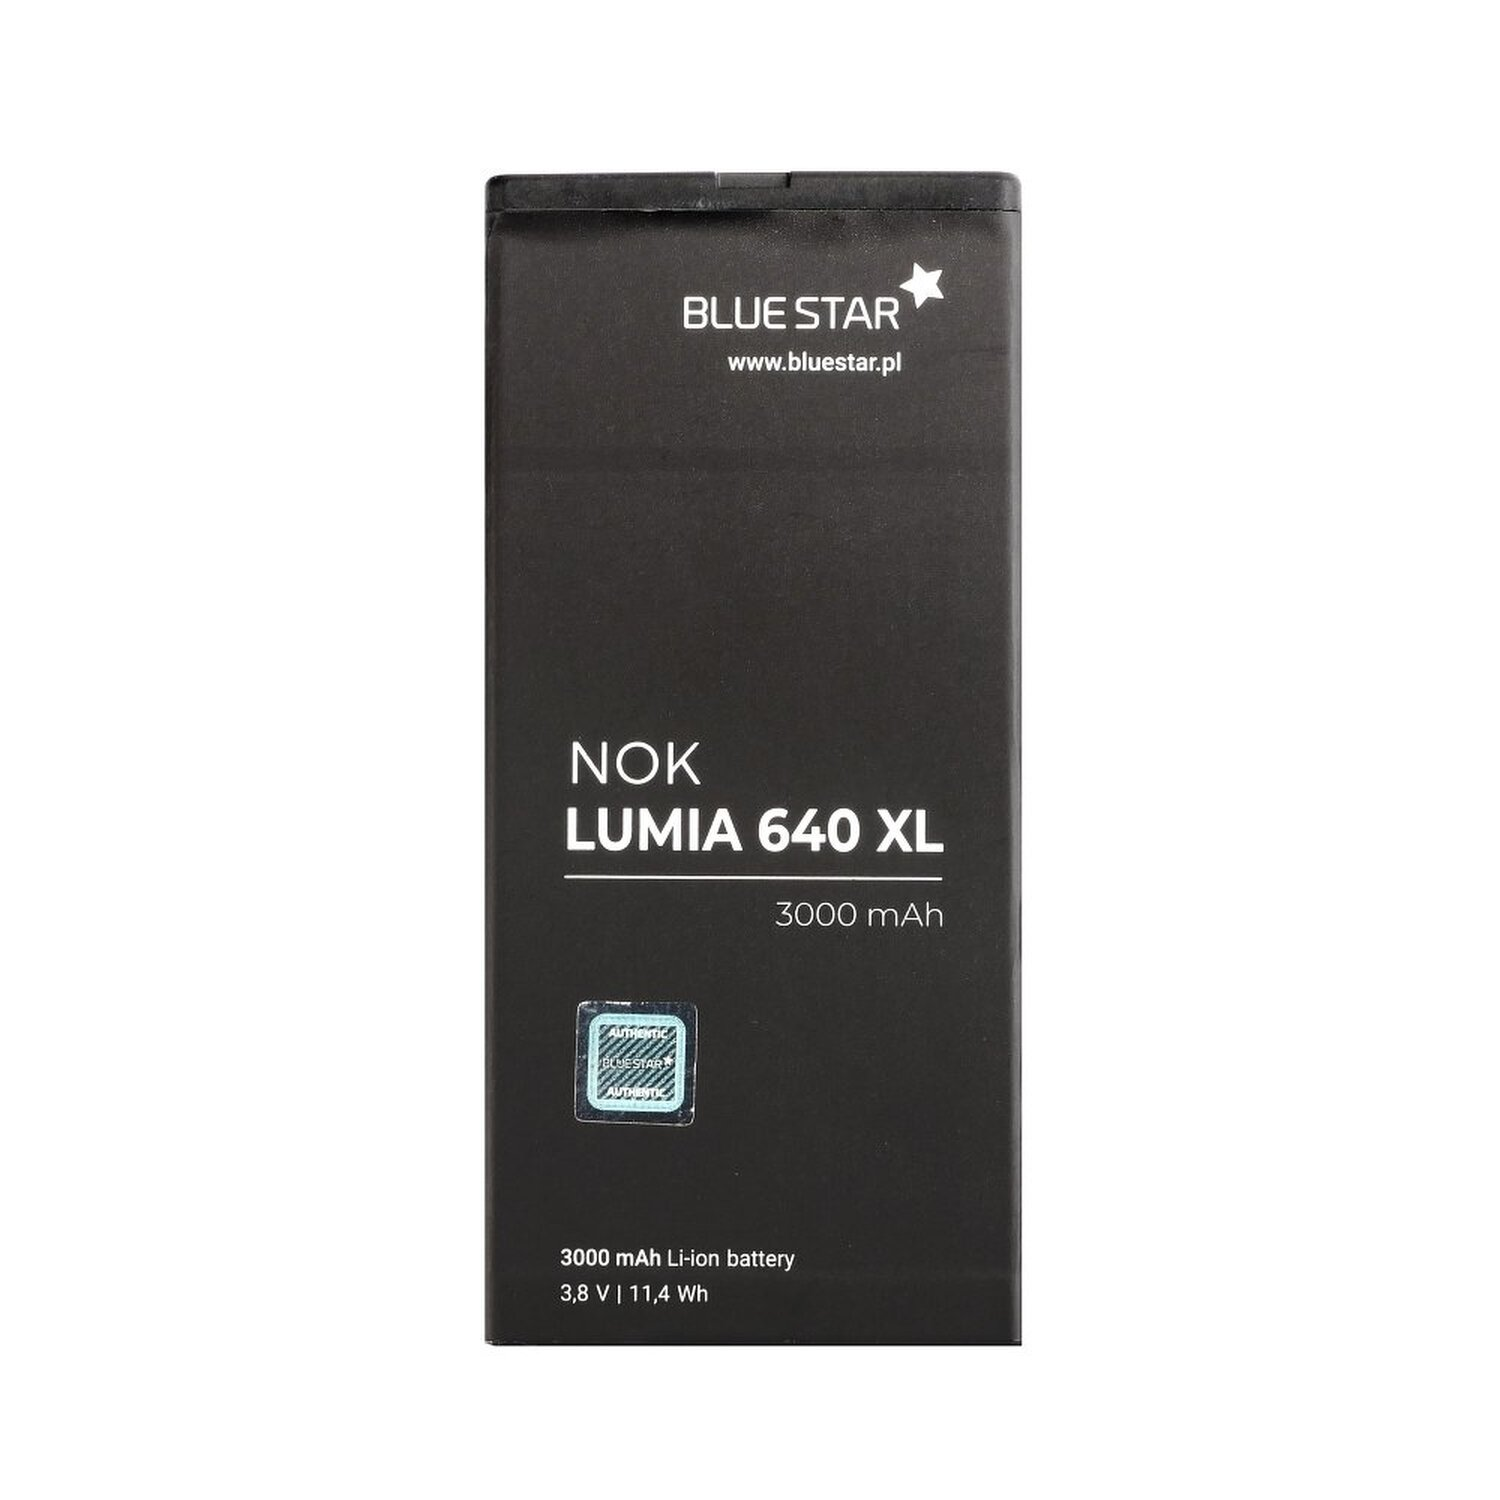 BLUESTAR Akku für Nokia XL Li-Ion Lumia Handyakku 640